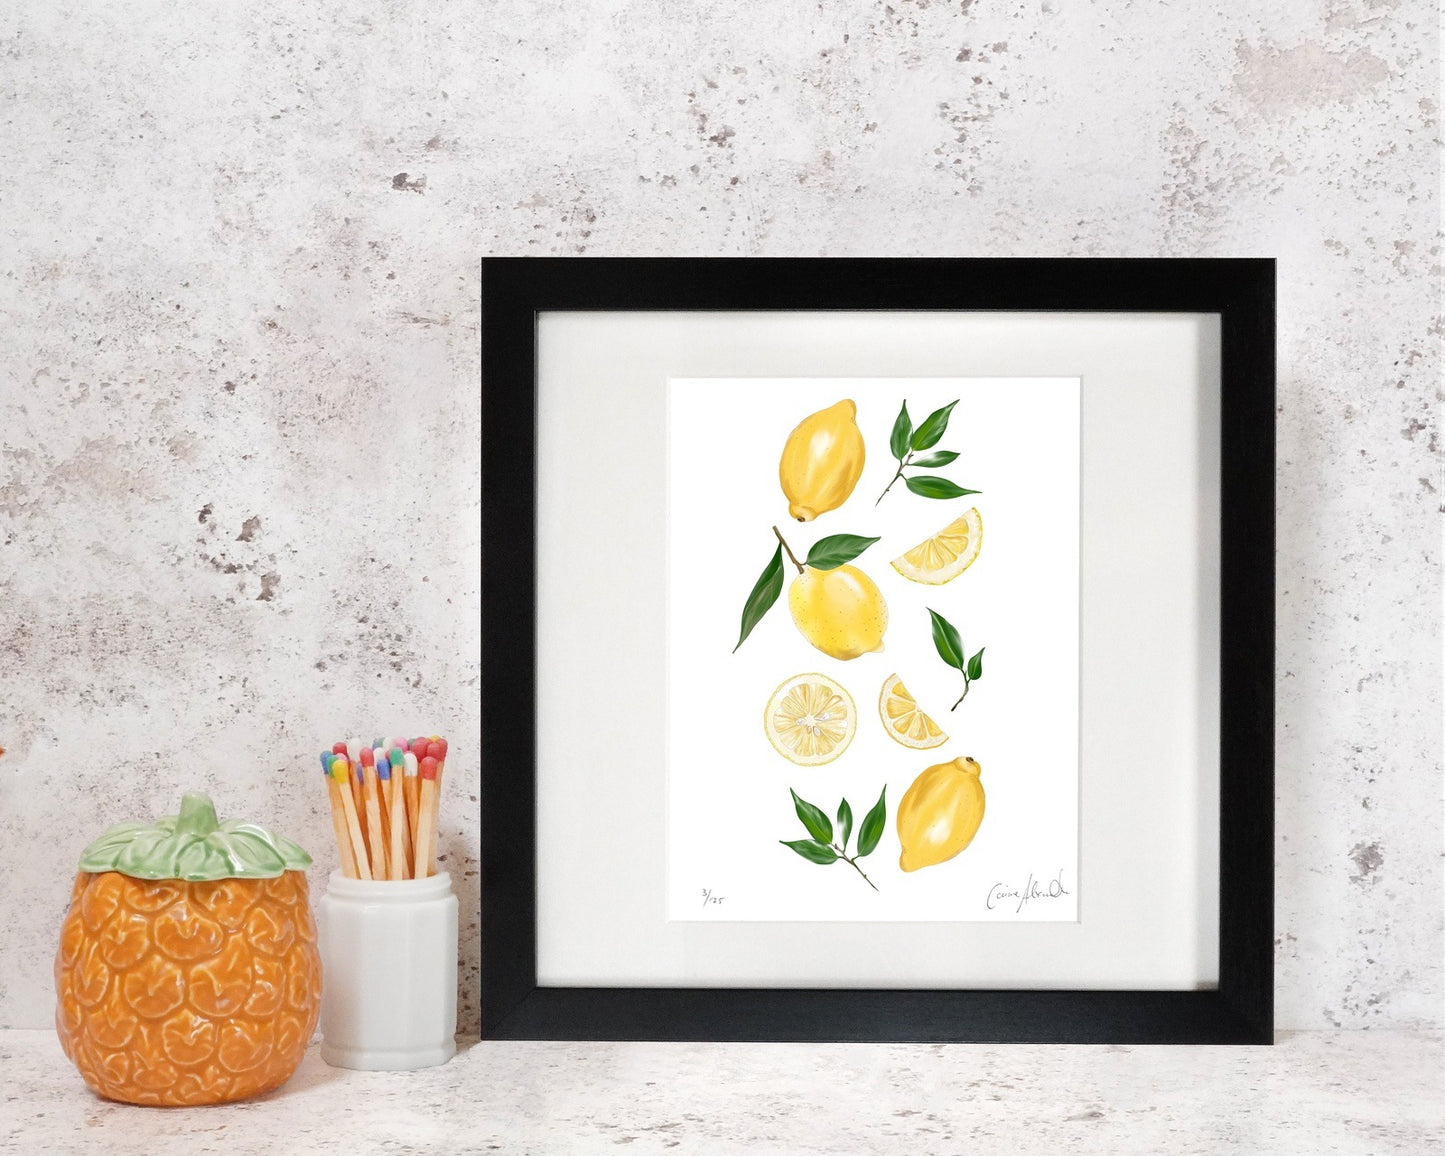 Yellow lemon print for the kitchen wall